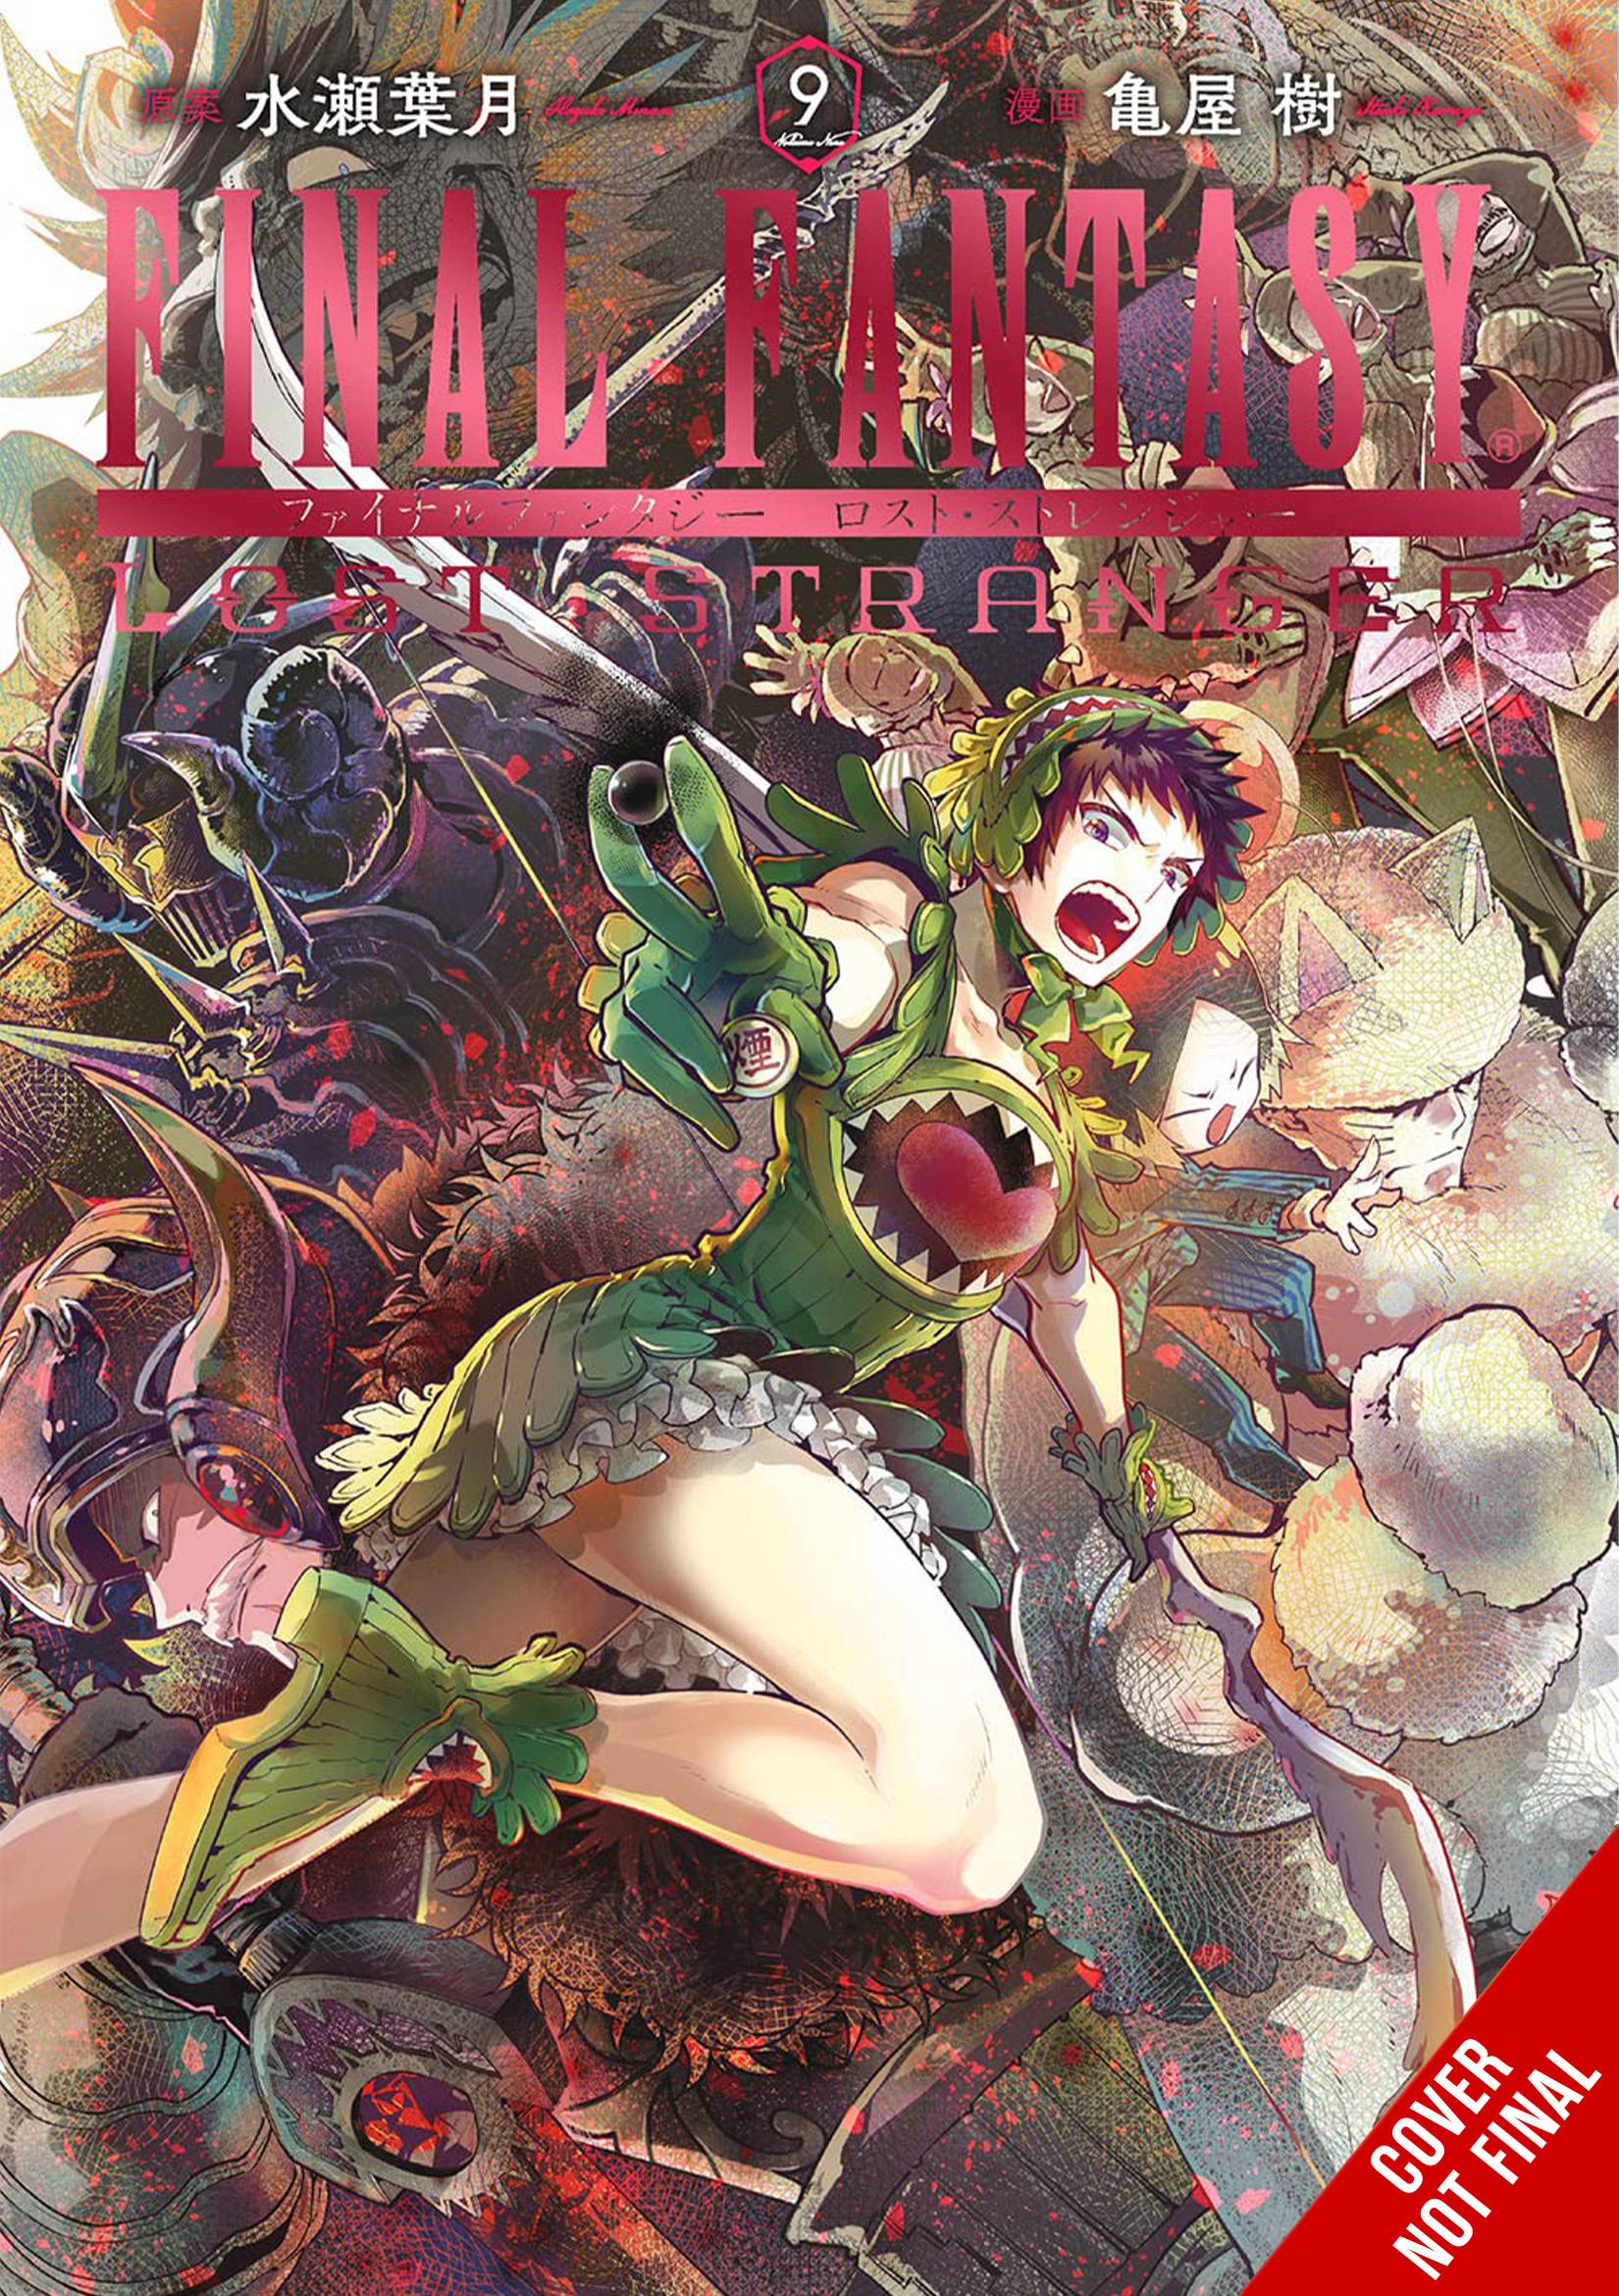 Apr Final Fantasy Lost Stranger Gn Vol Previews World